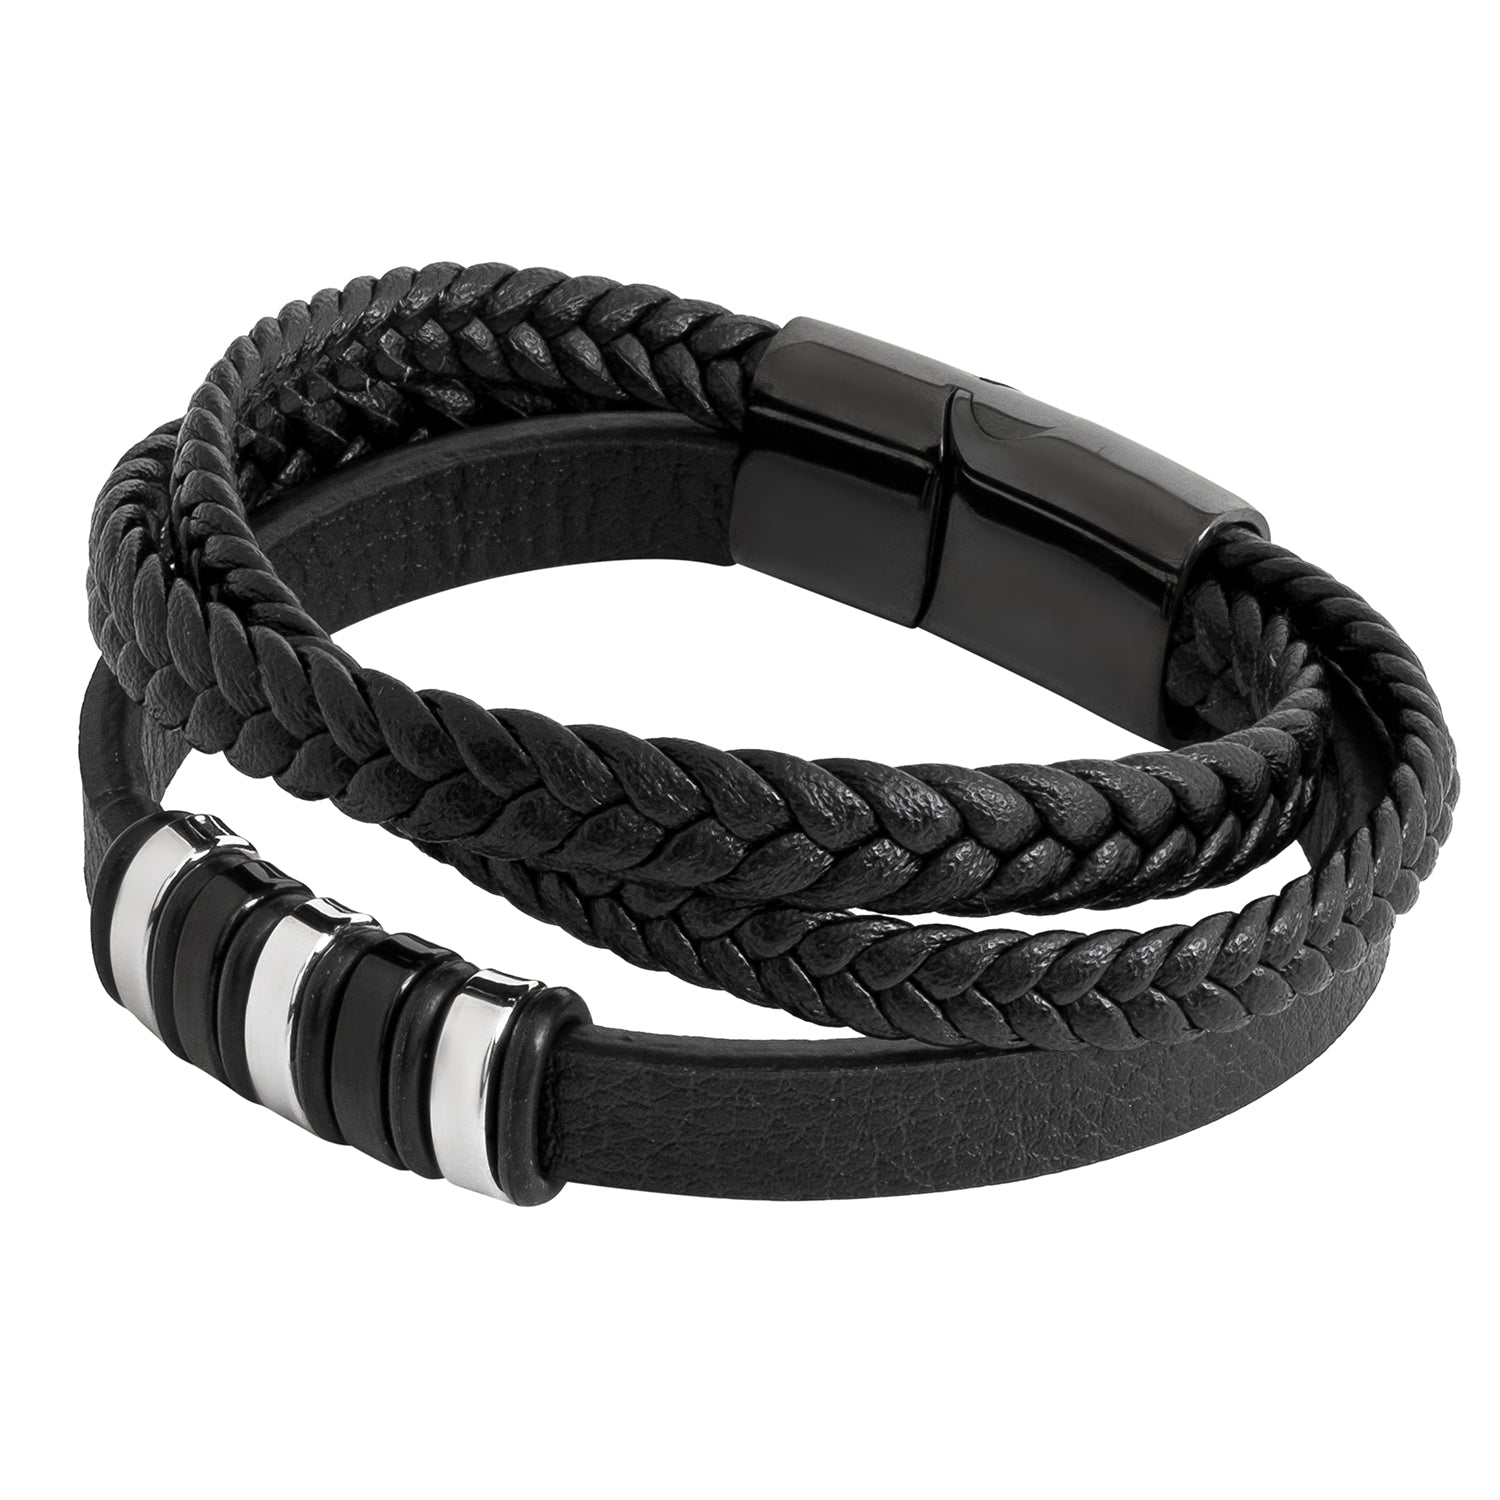 Buy Designer Black Leather Braided Steel Bracelet For Men And Boys Gym  Bracelet For Boys Genuine Leather Bracelet Gifts For Him Stylish 8 Inch  Bracelet at Amazon.in